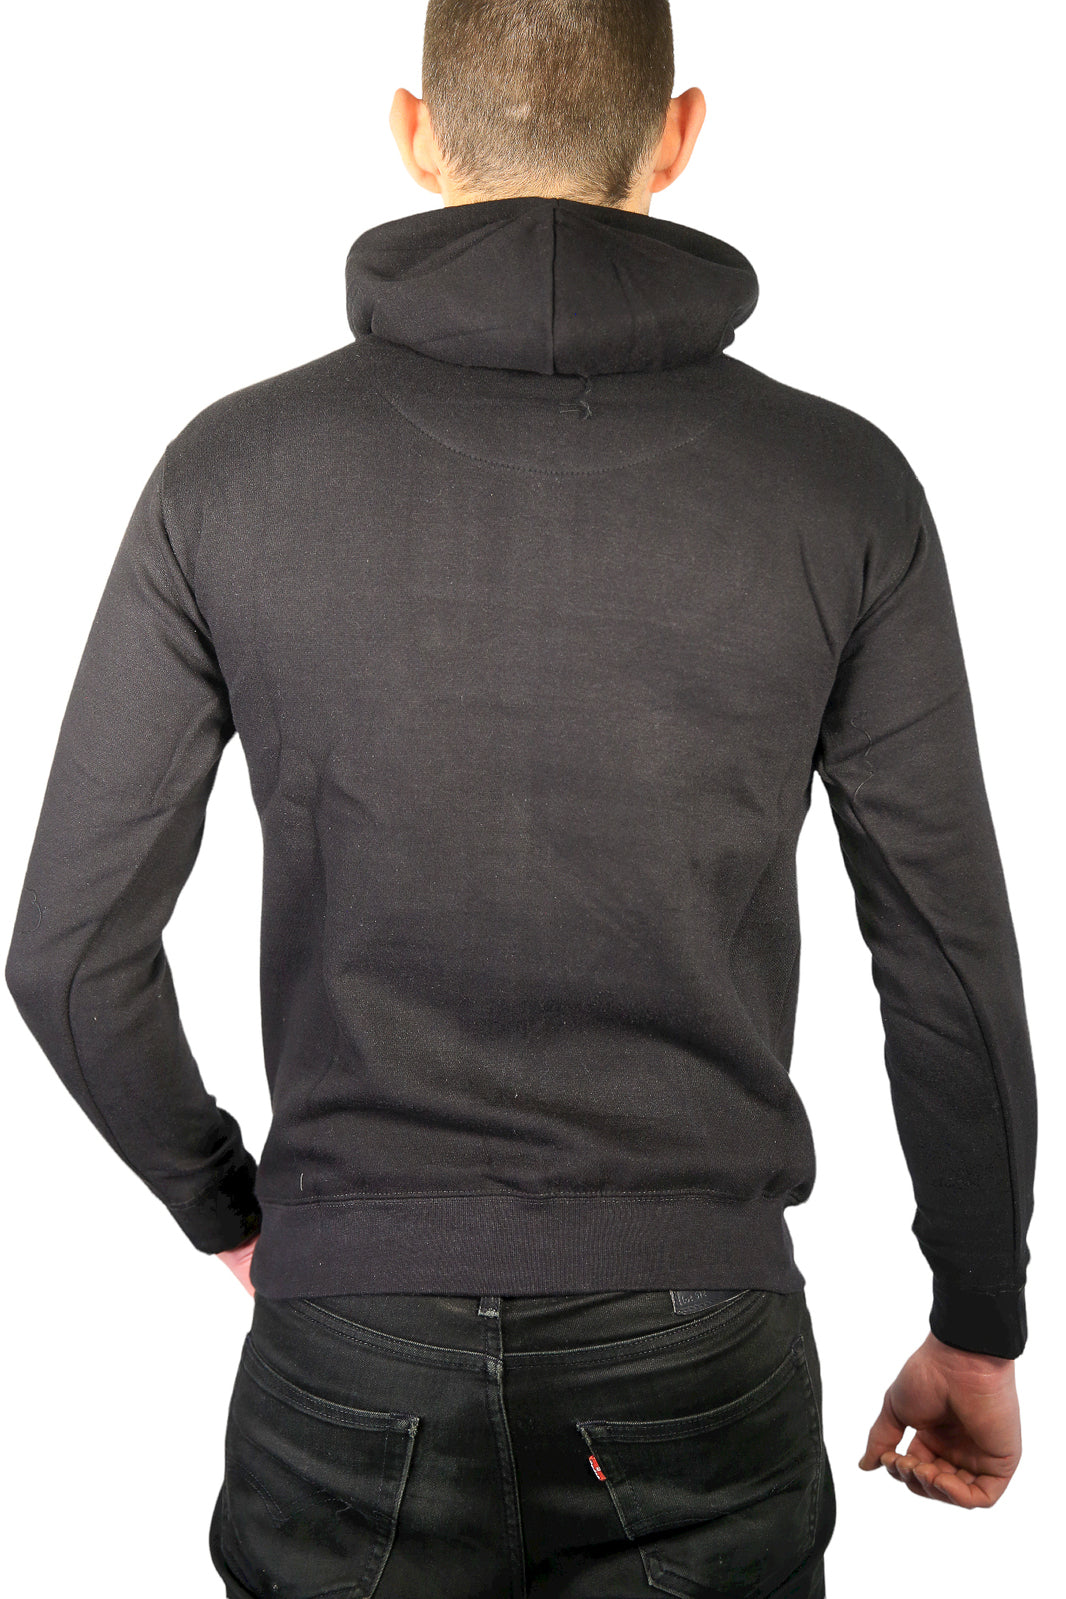 Adult Mens 100% Cotton Fleece Hoodie Jumper Pullover Sweater Warm Sweatshirt - Black - S